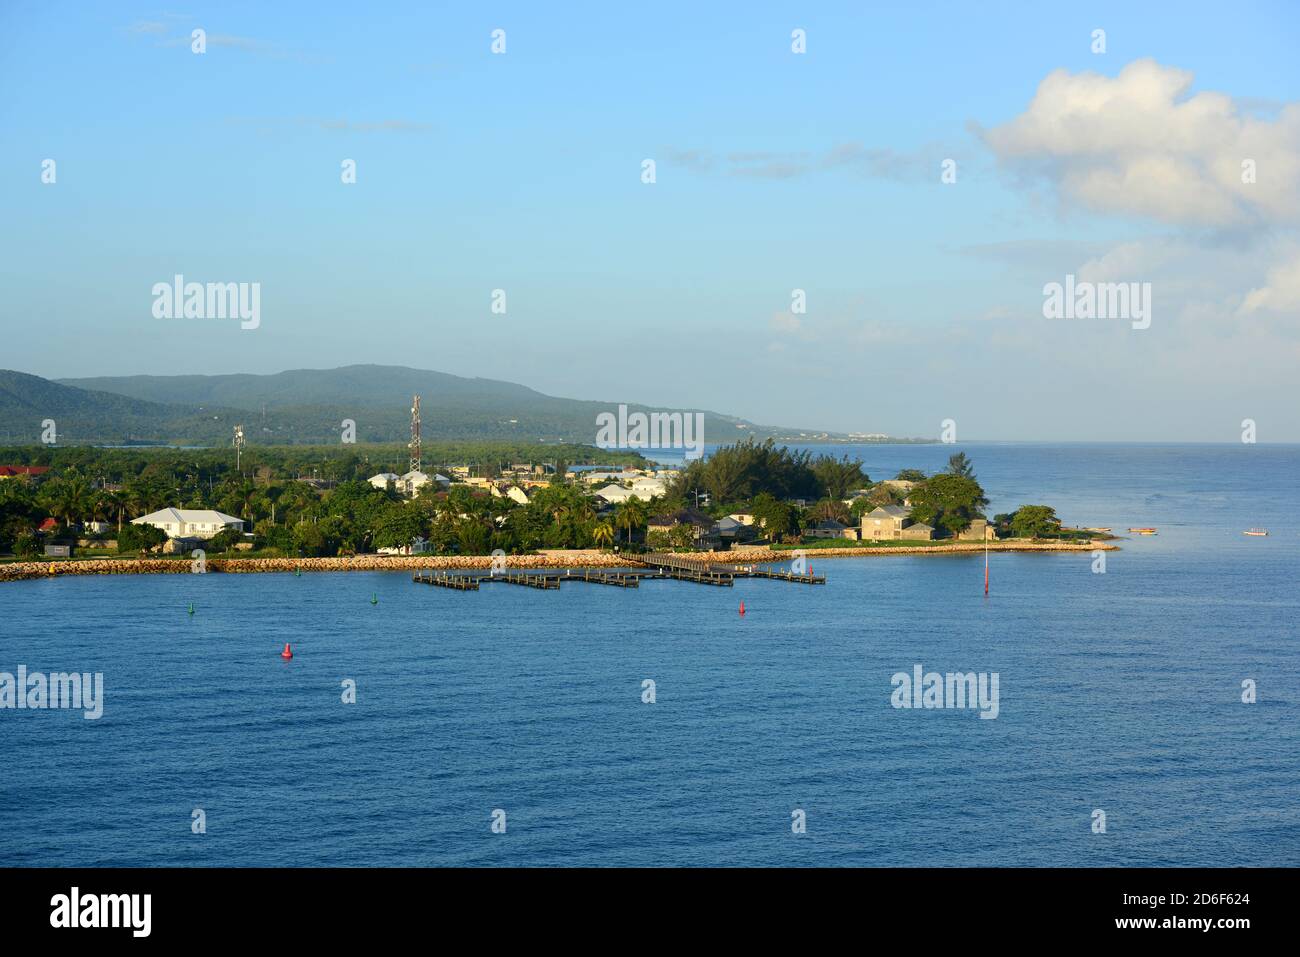 Aerial view of Falmouth Harbor and coastline, Jamaica. Stock Photo